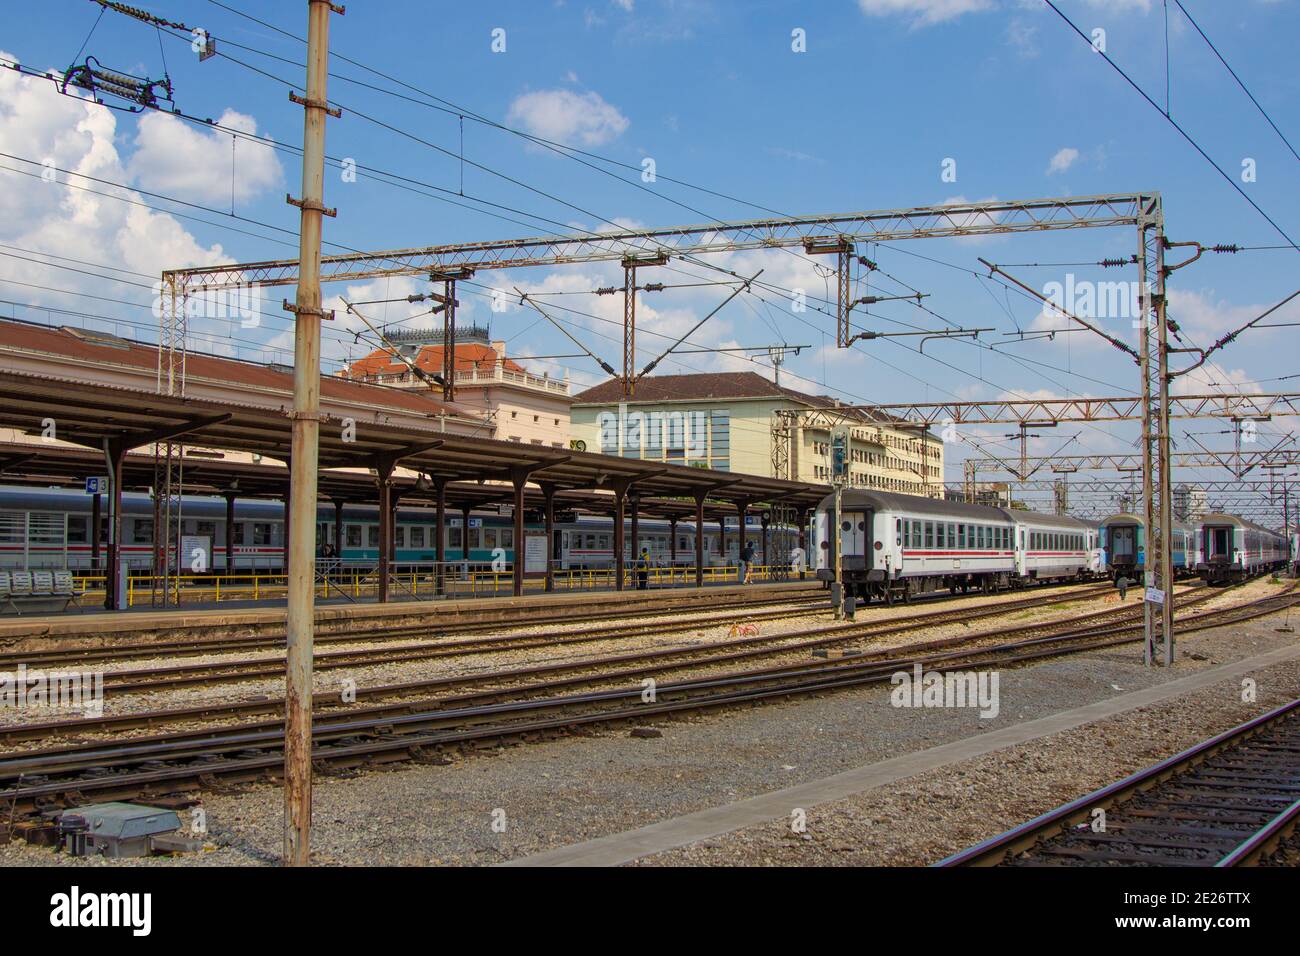 ZAGREB, KROATIEN - 24. Mai 2012: Züge, Eisenbahnen und Bahnsteige am Hauptbahnhof in Zagreb, Kroatien Stockfoto